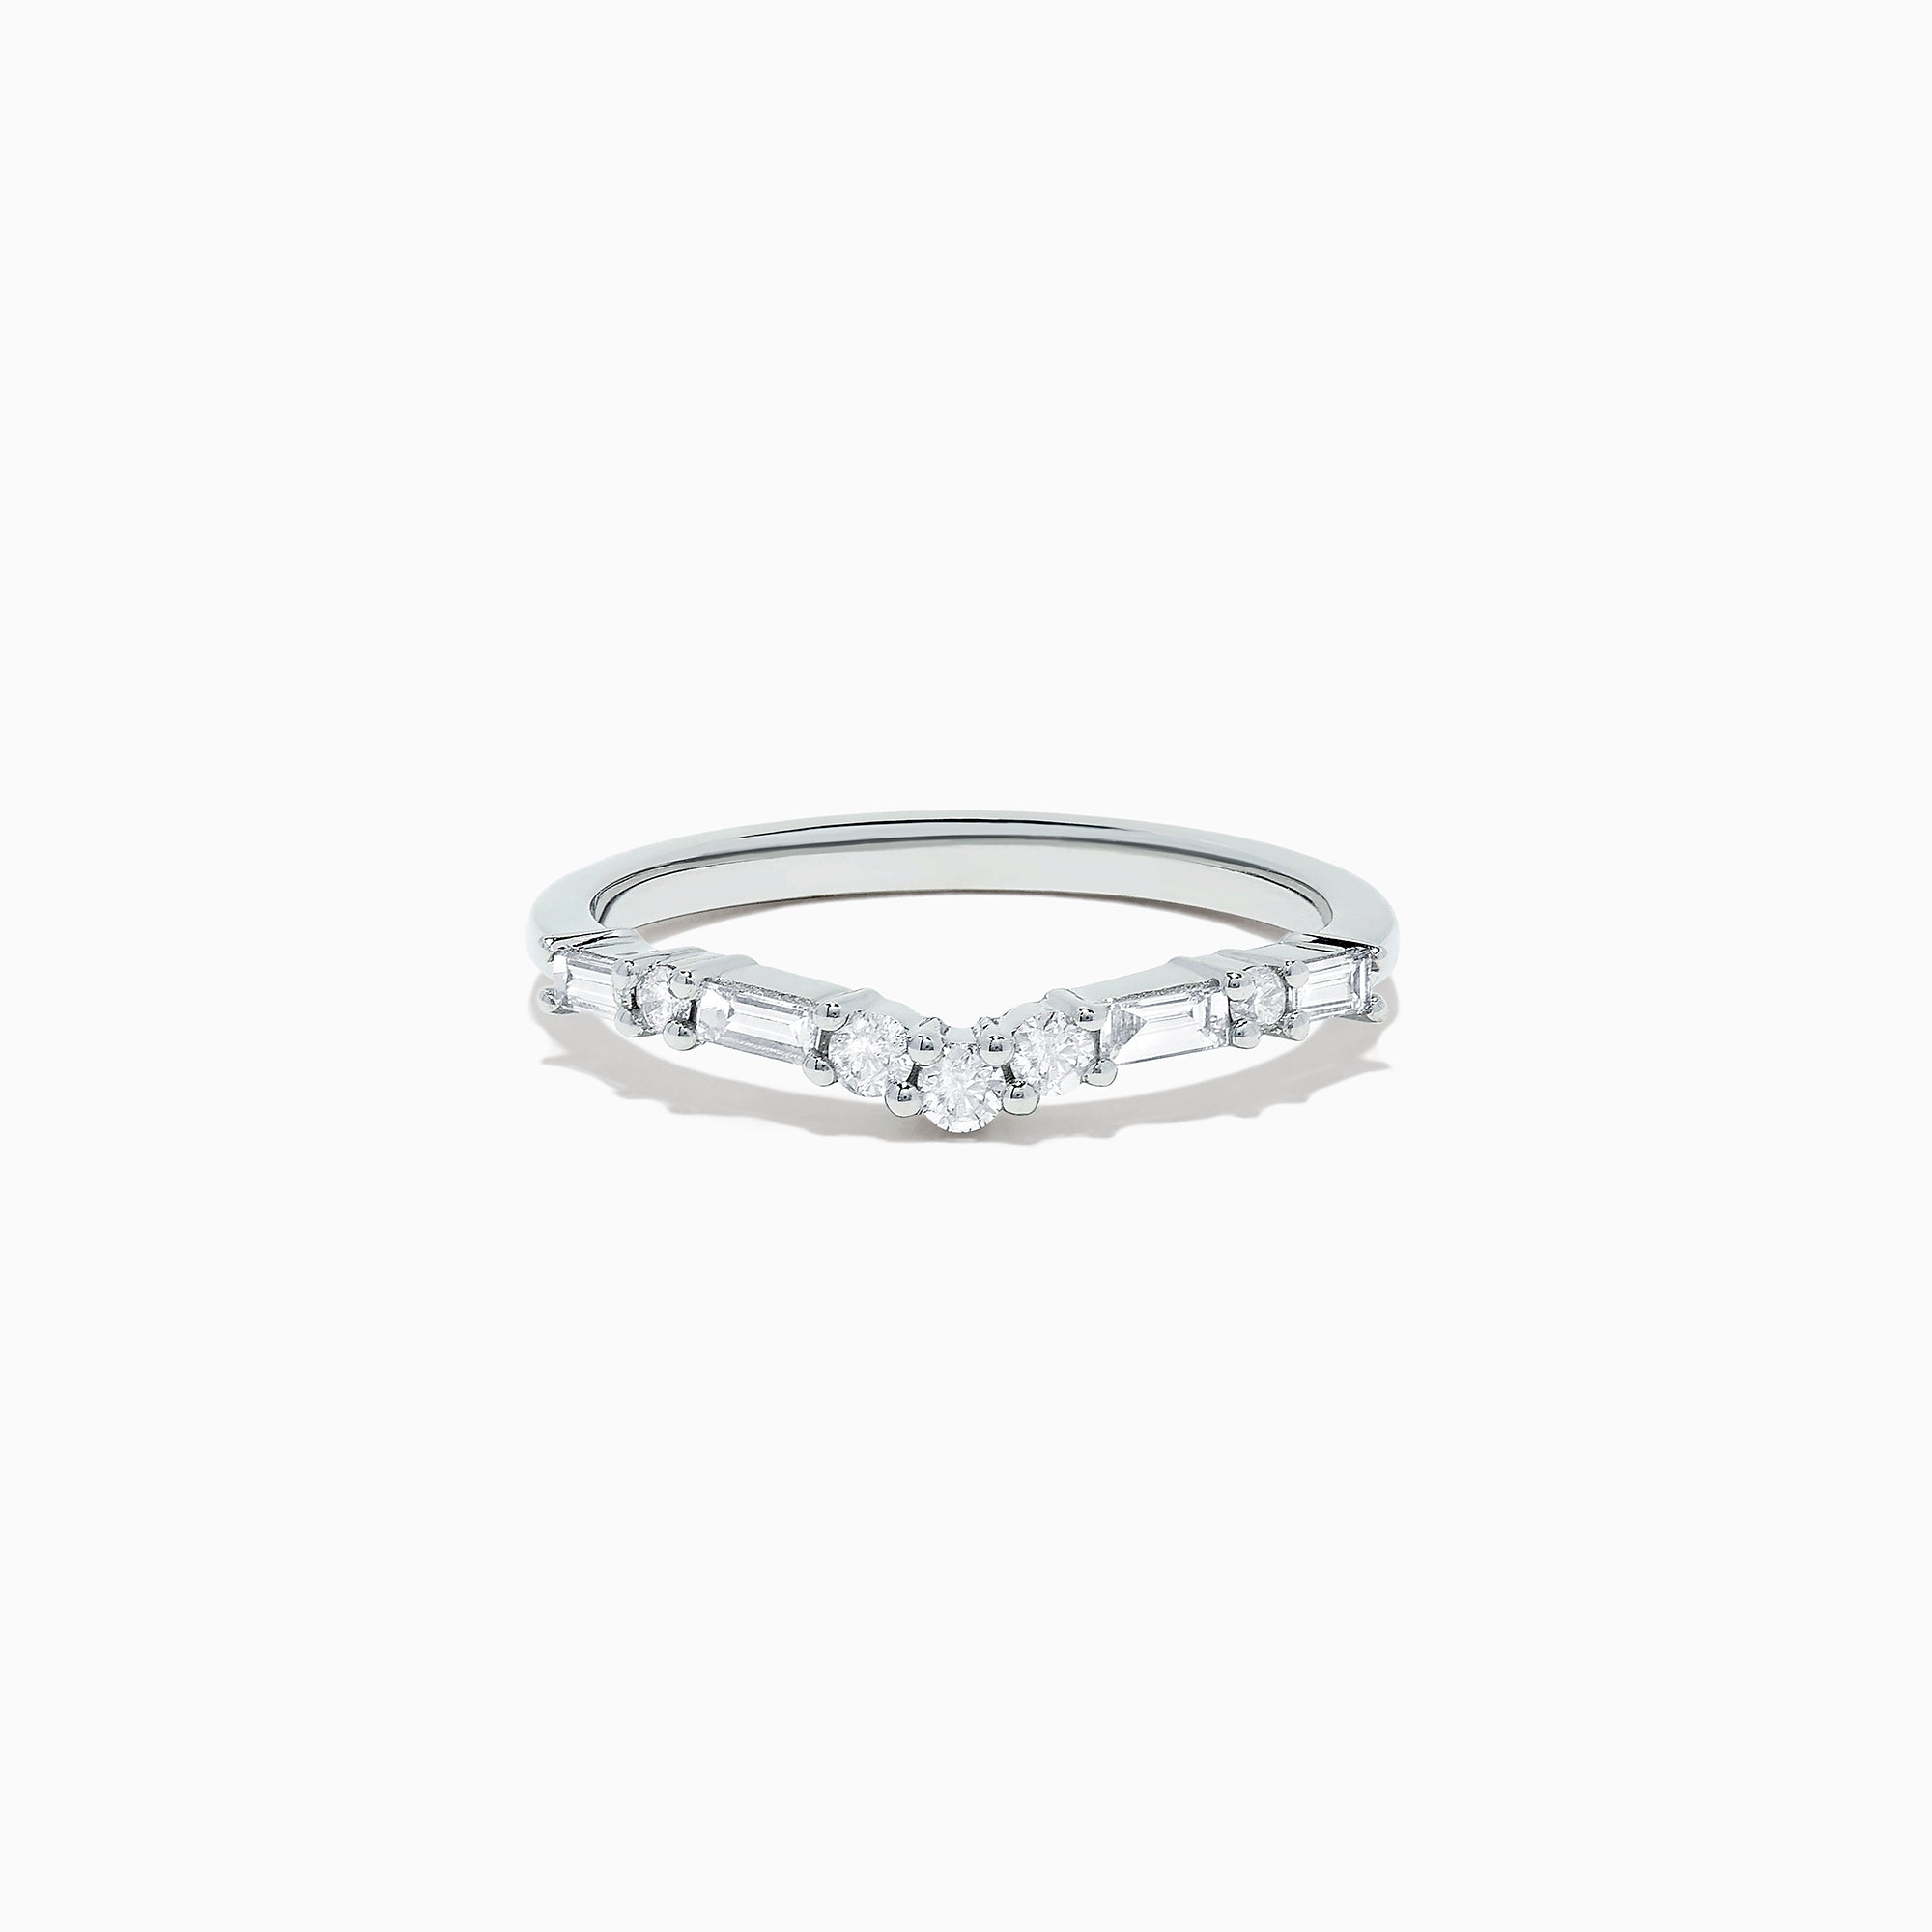 Effy Classique 14K White Gold Diamond Ring, 0.32 TCW